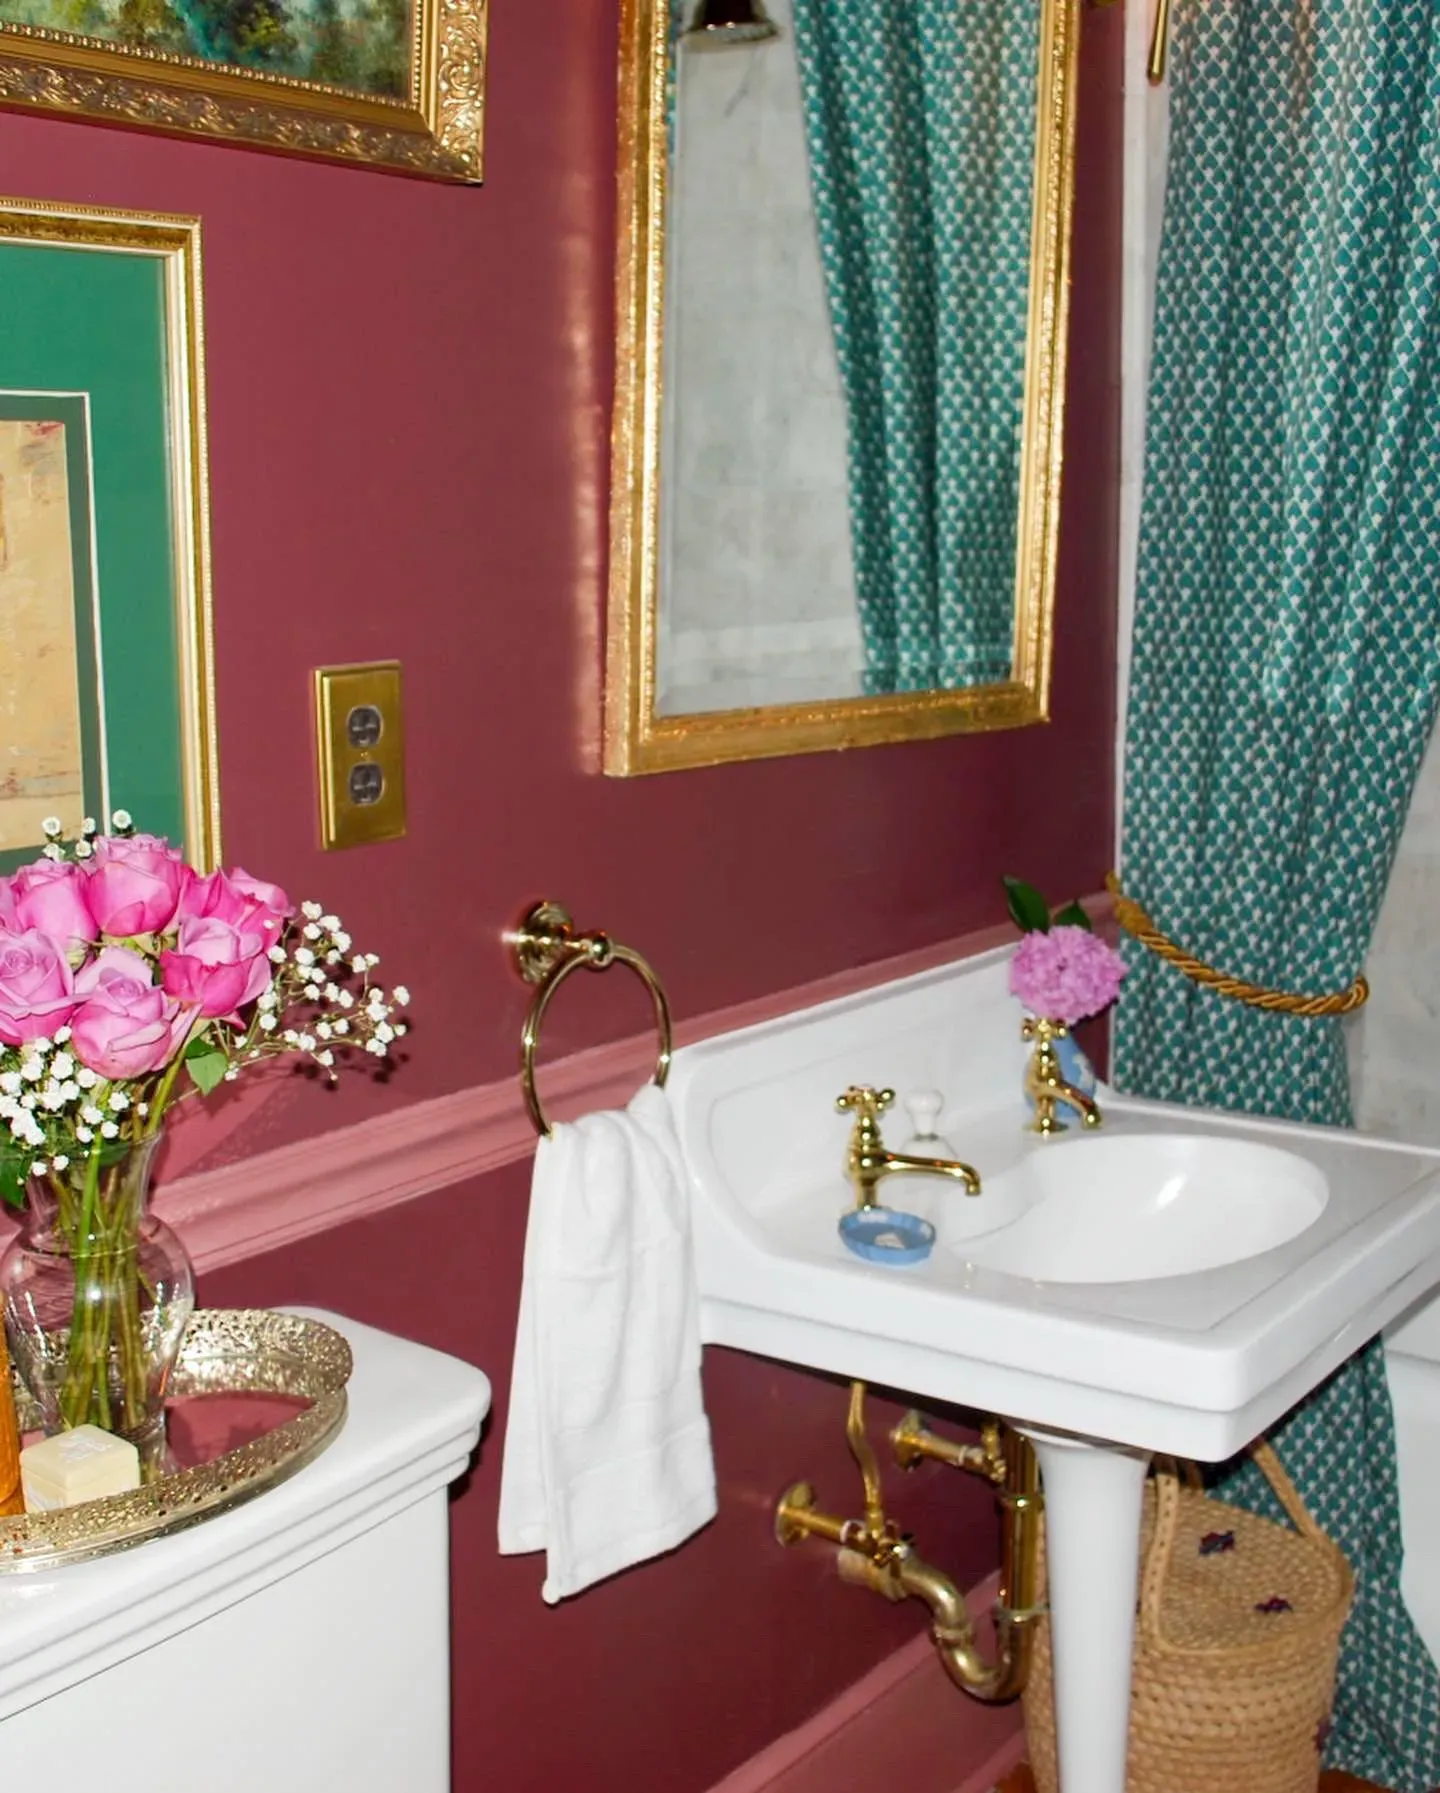 Benjamin Moore New London Burgundy bathroom color